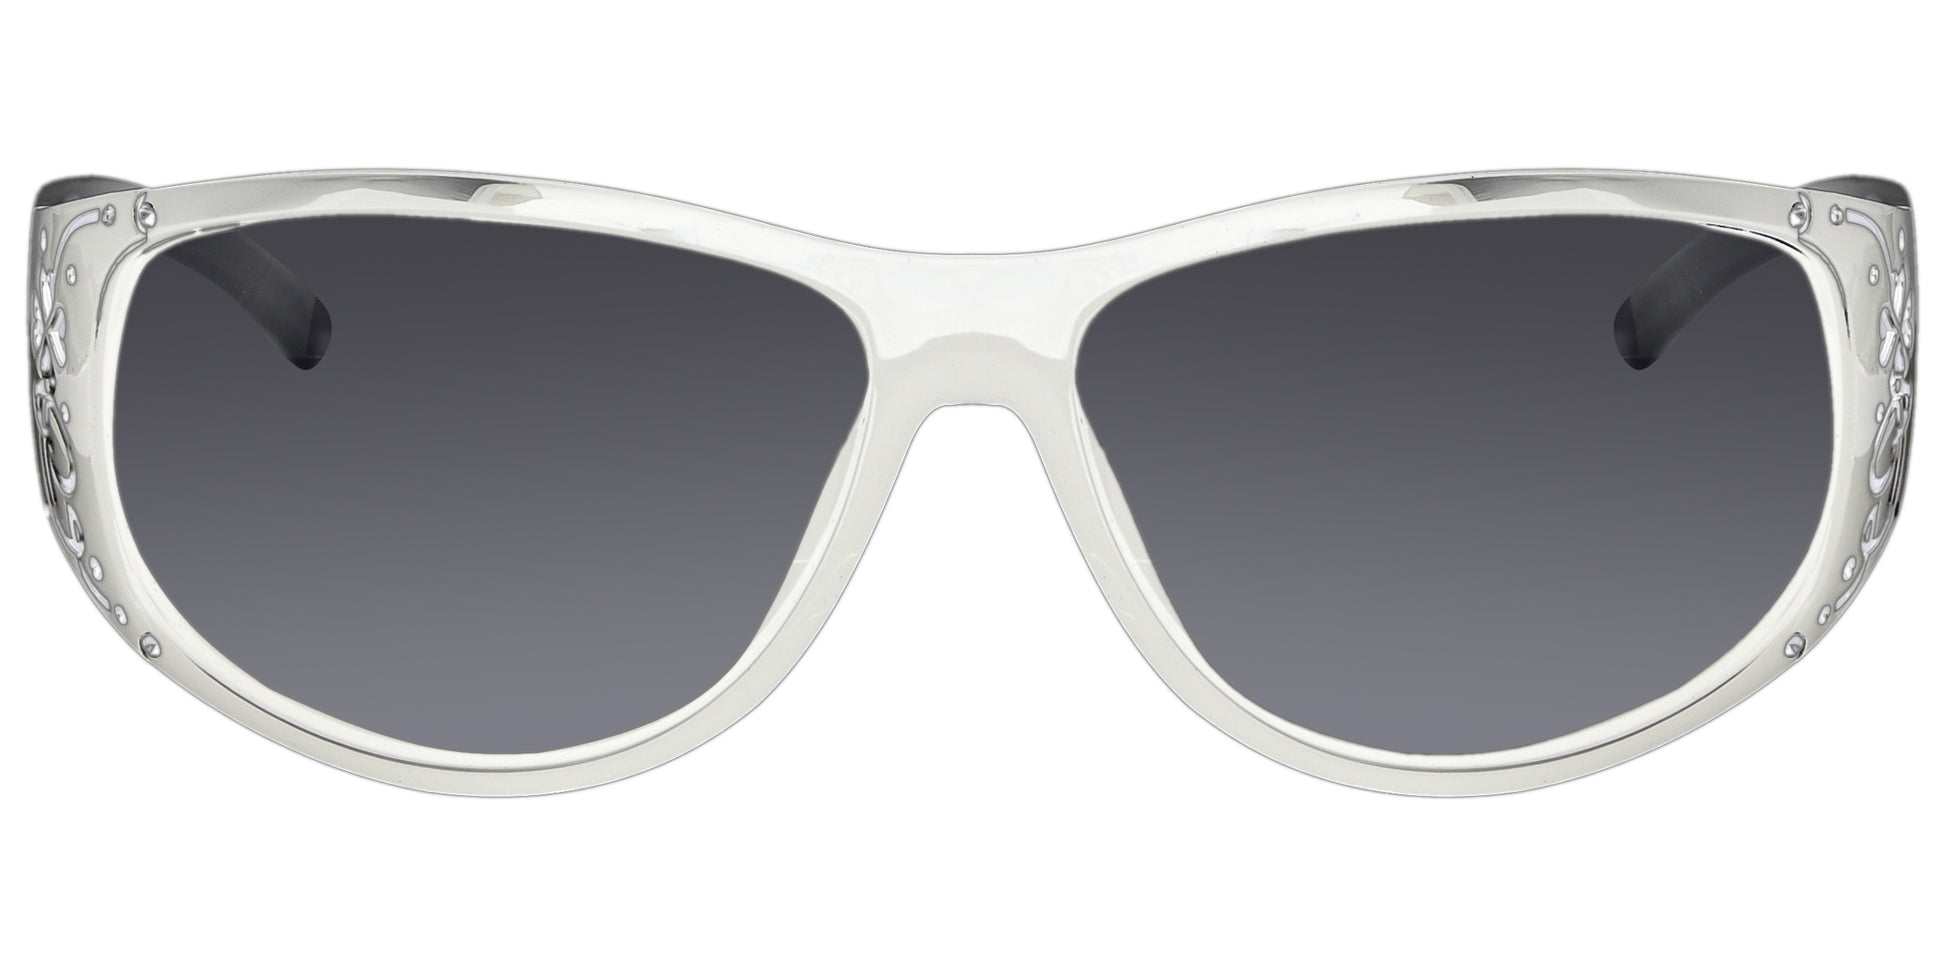 Third image: Polarized Sunglasses for Women - Premium Fashion Sunglasses - HZ Series Chic Womens Designer Sunglasses